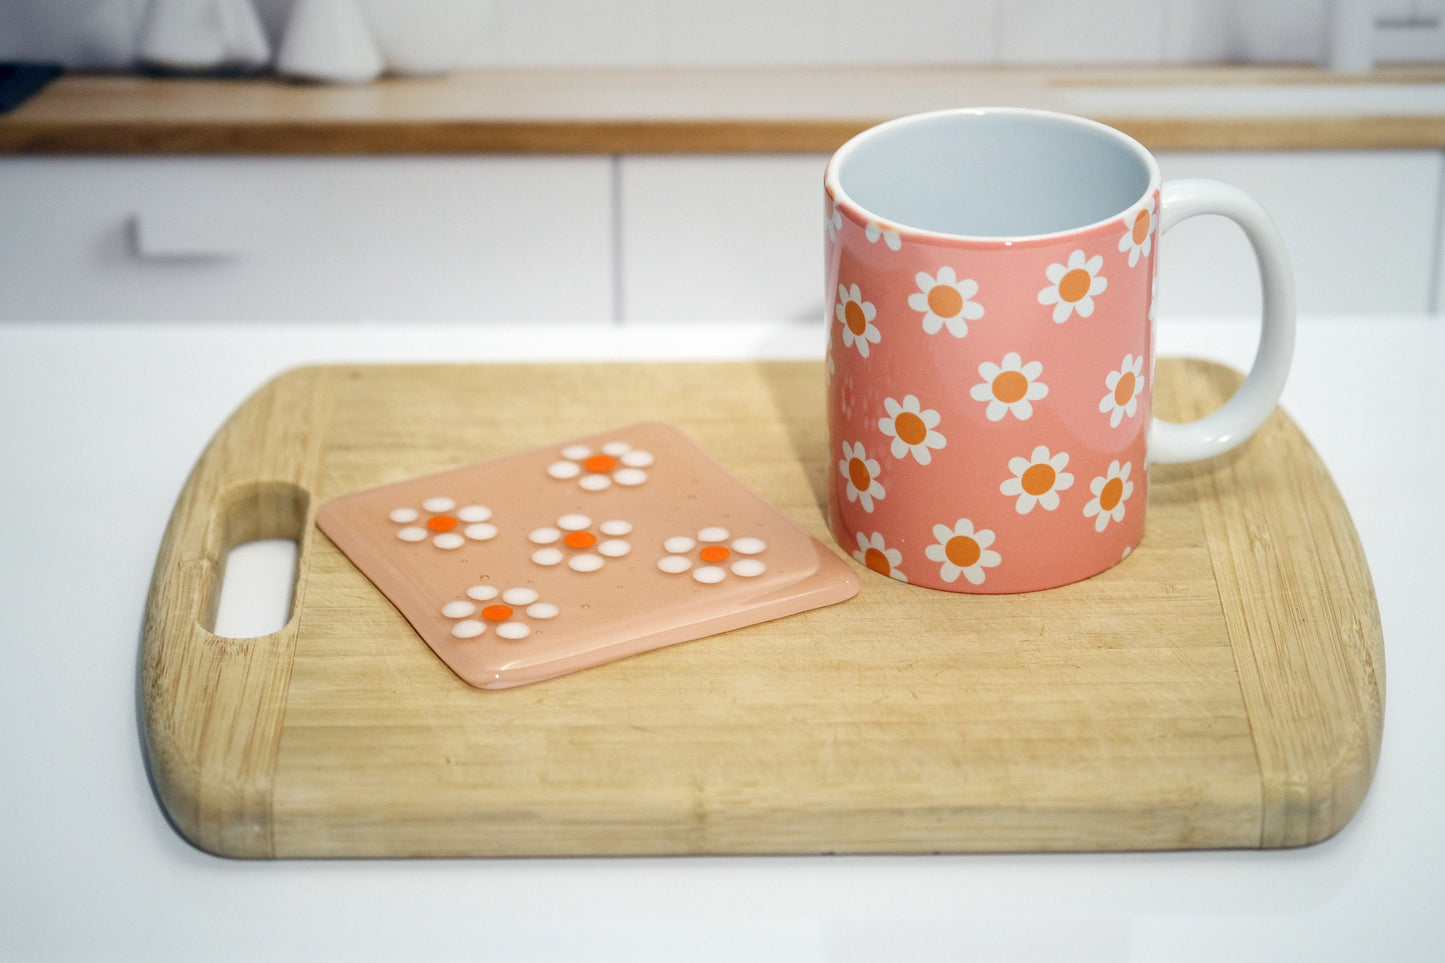 Peachy Ceramic Mug & White Flowers Coaster Set - 10 Ounce Mug, 4 Inch Square Coasters